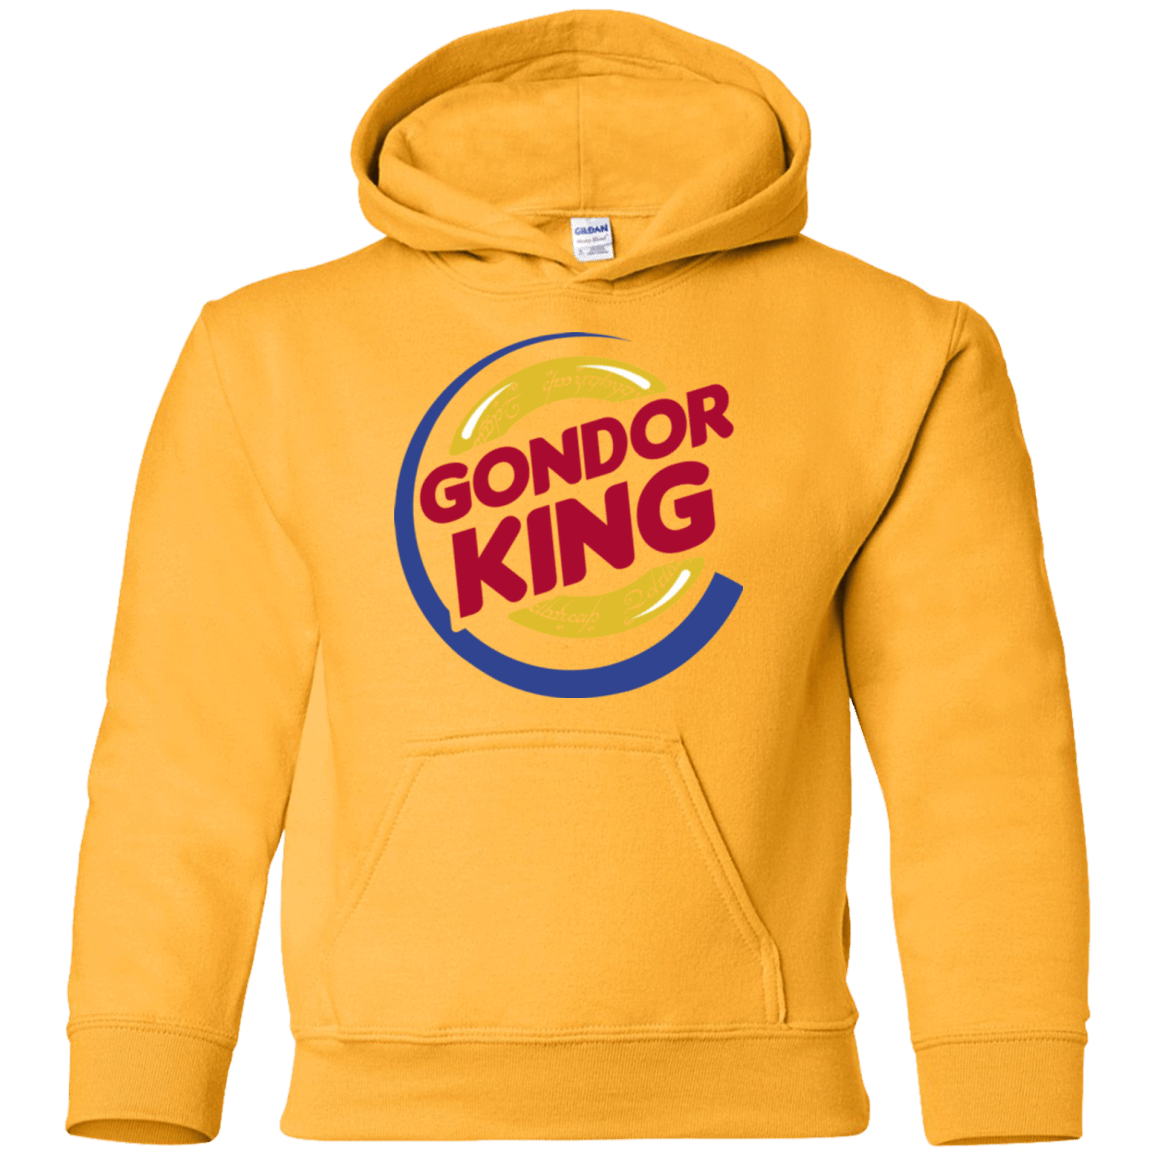 Sweatshirts Gold / YS Gondor King Youth Hoodie